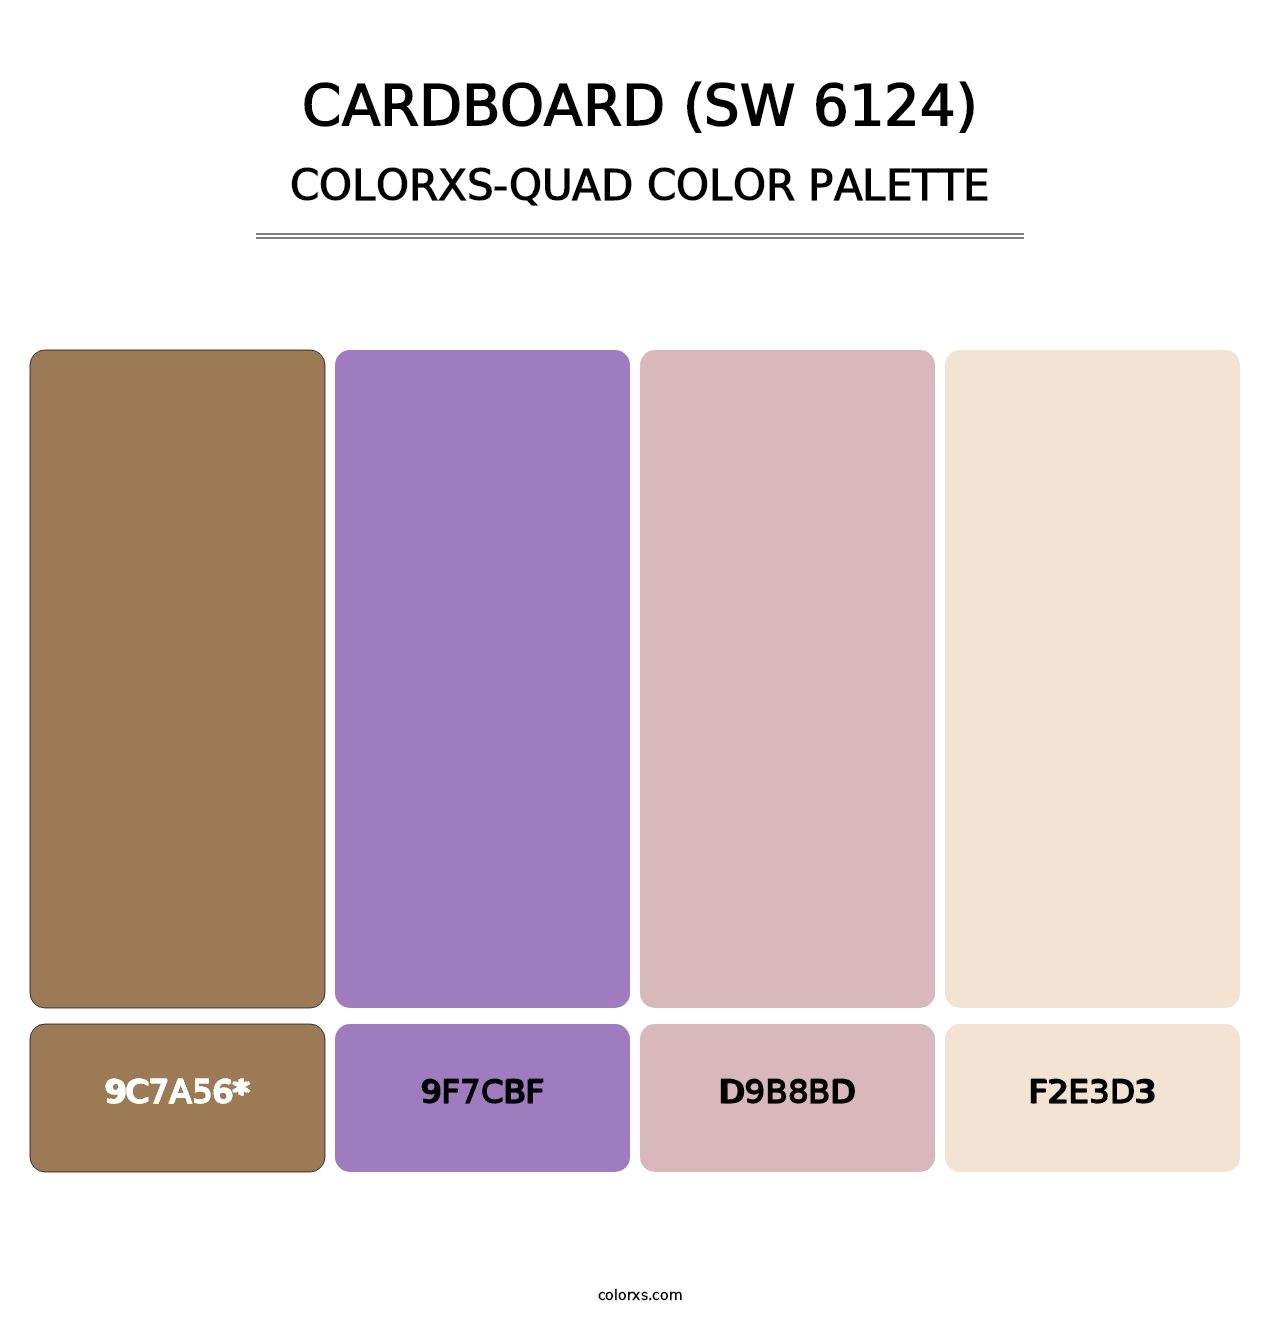 Cardboard (SW 6124) - Colorxs Quad Palette